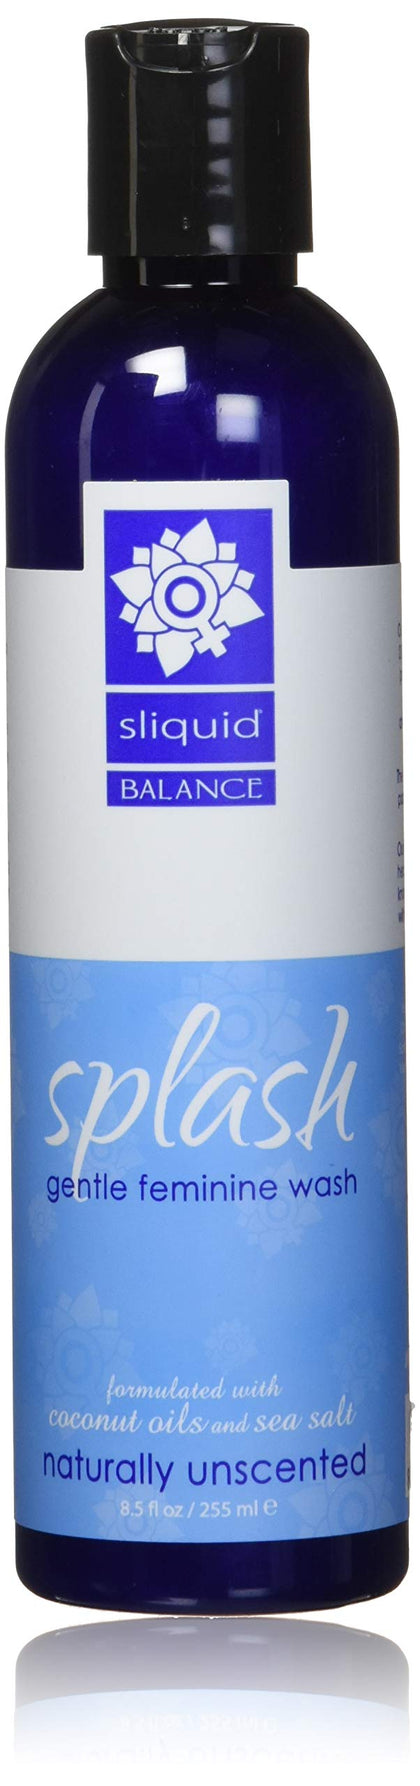 Sliquid Splash Gentle Feminine Wash - Unscented 8.5 fl oz